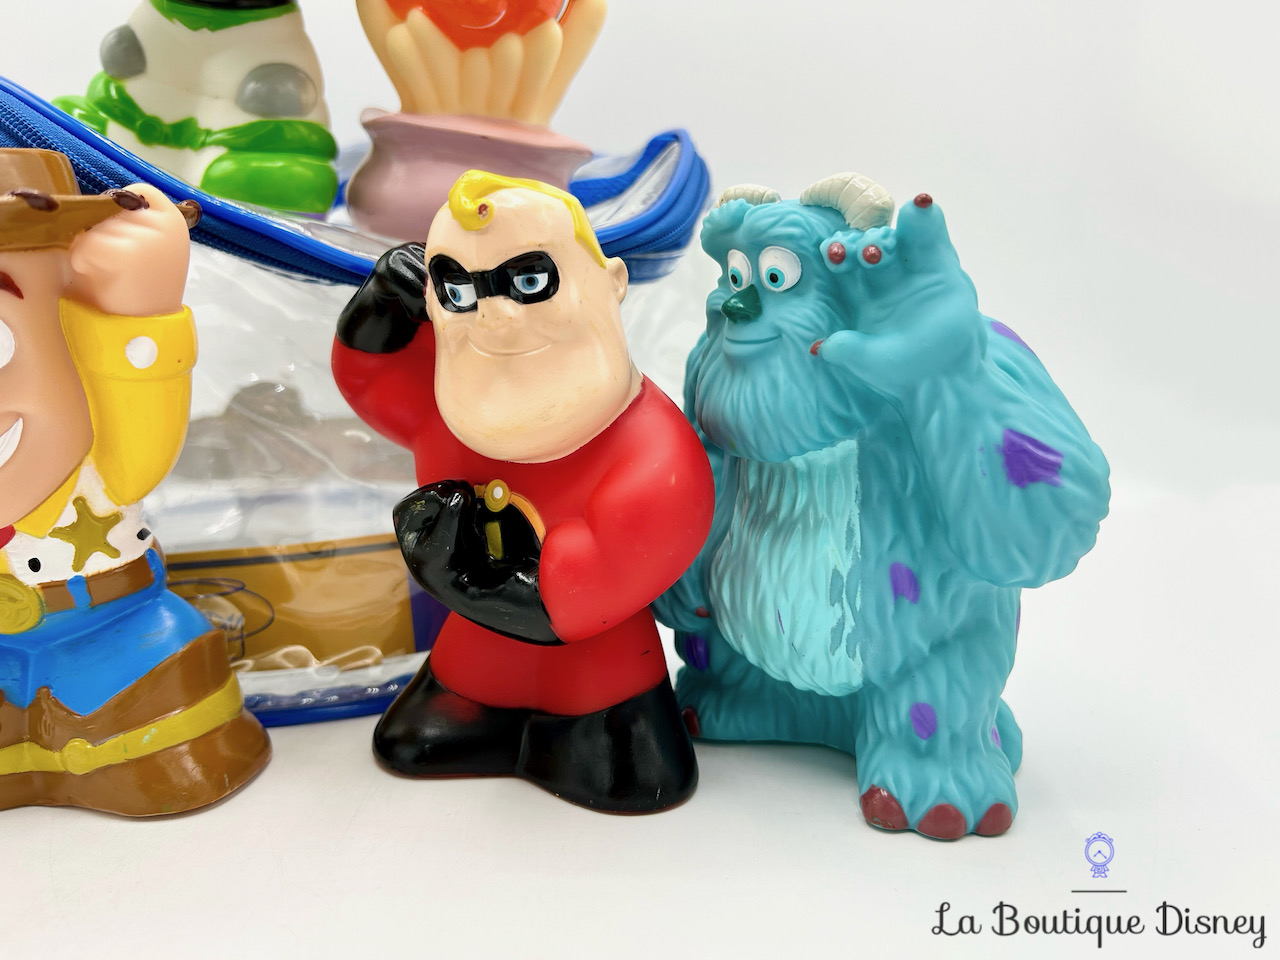 jouets-figurines-de-bain-pixar-indestrutibles-sulli-toy-story-némo-disneyland-paris-disney-pochette-3